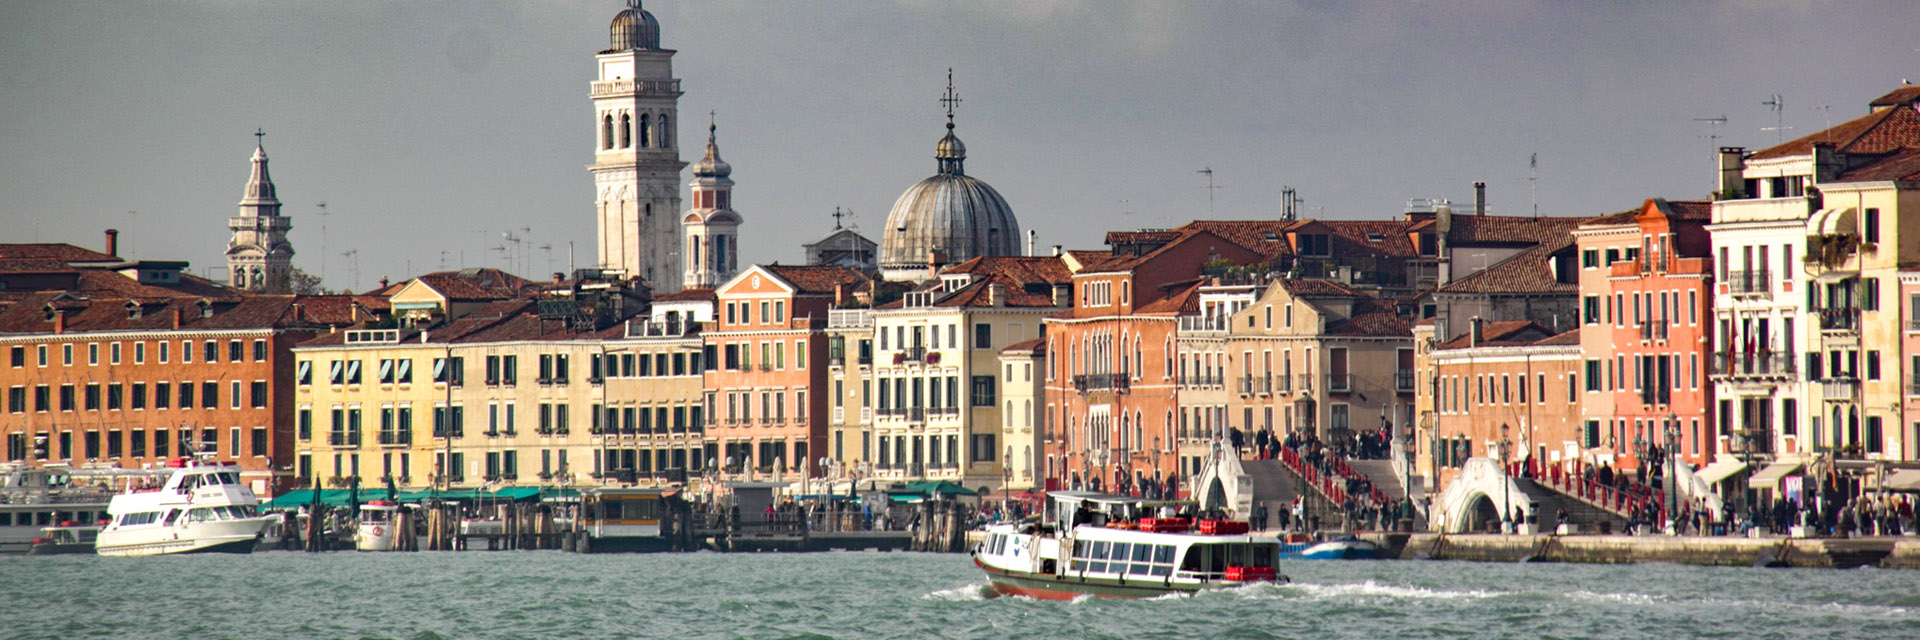 Ingresso para visitar Veneza